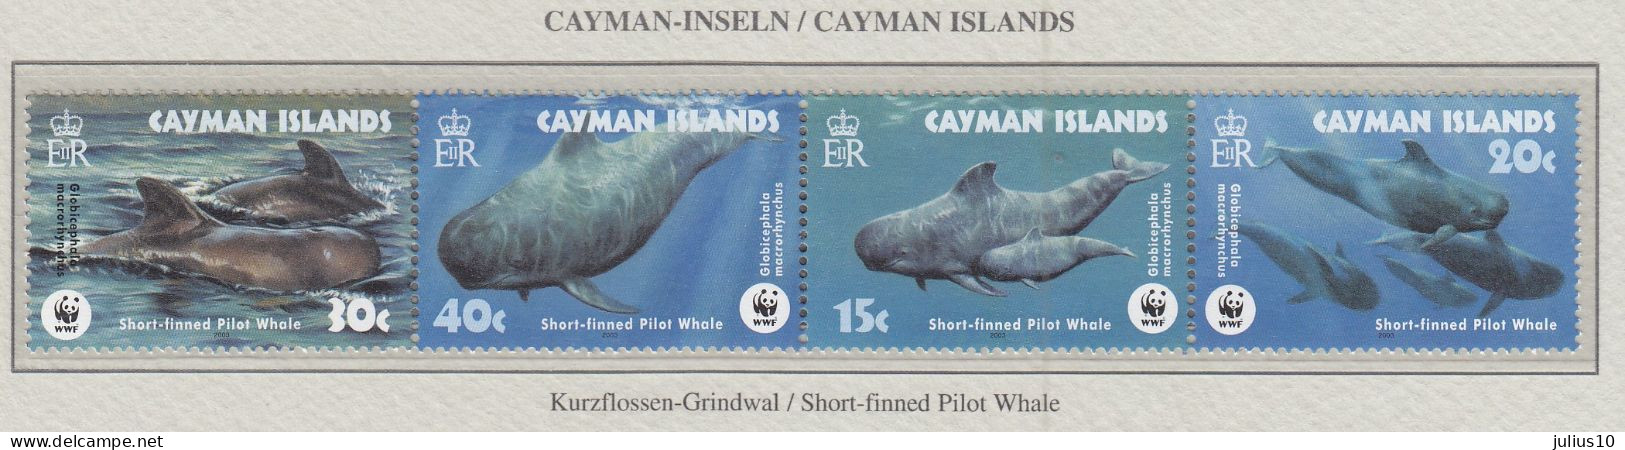 CAYMAN ISLANDS 2003 WWF Whales Mi 970-973 MNH Fauna 669 - Ballenas